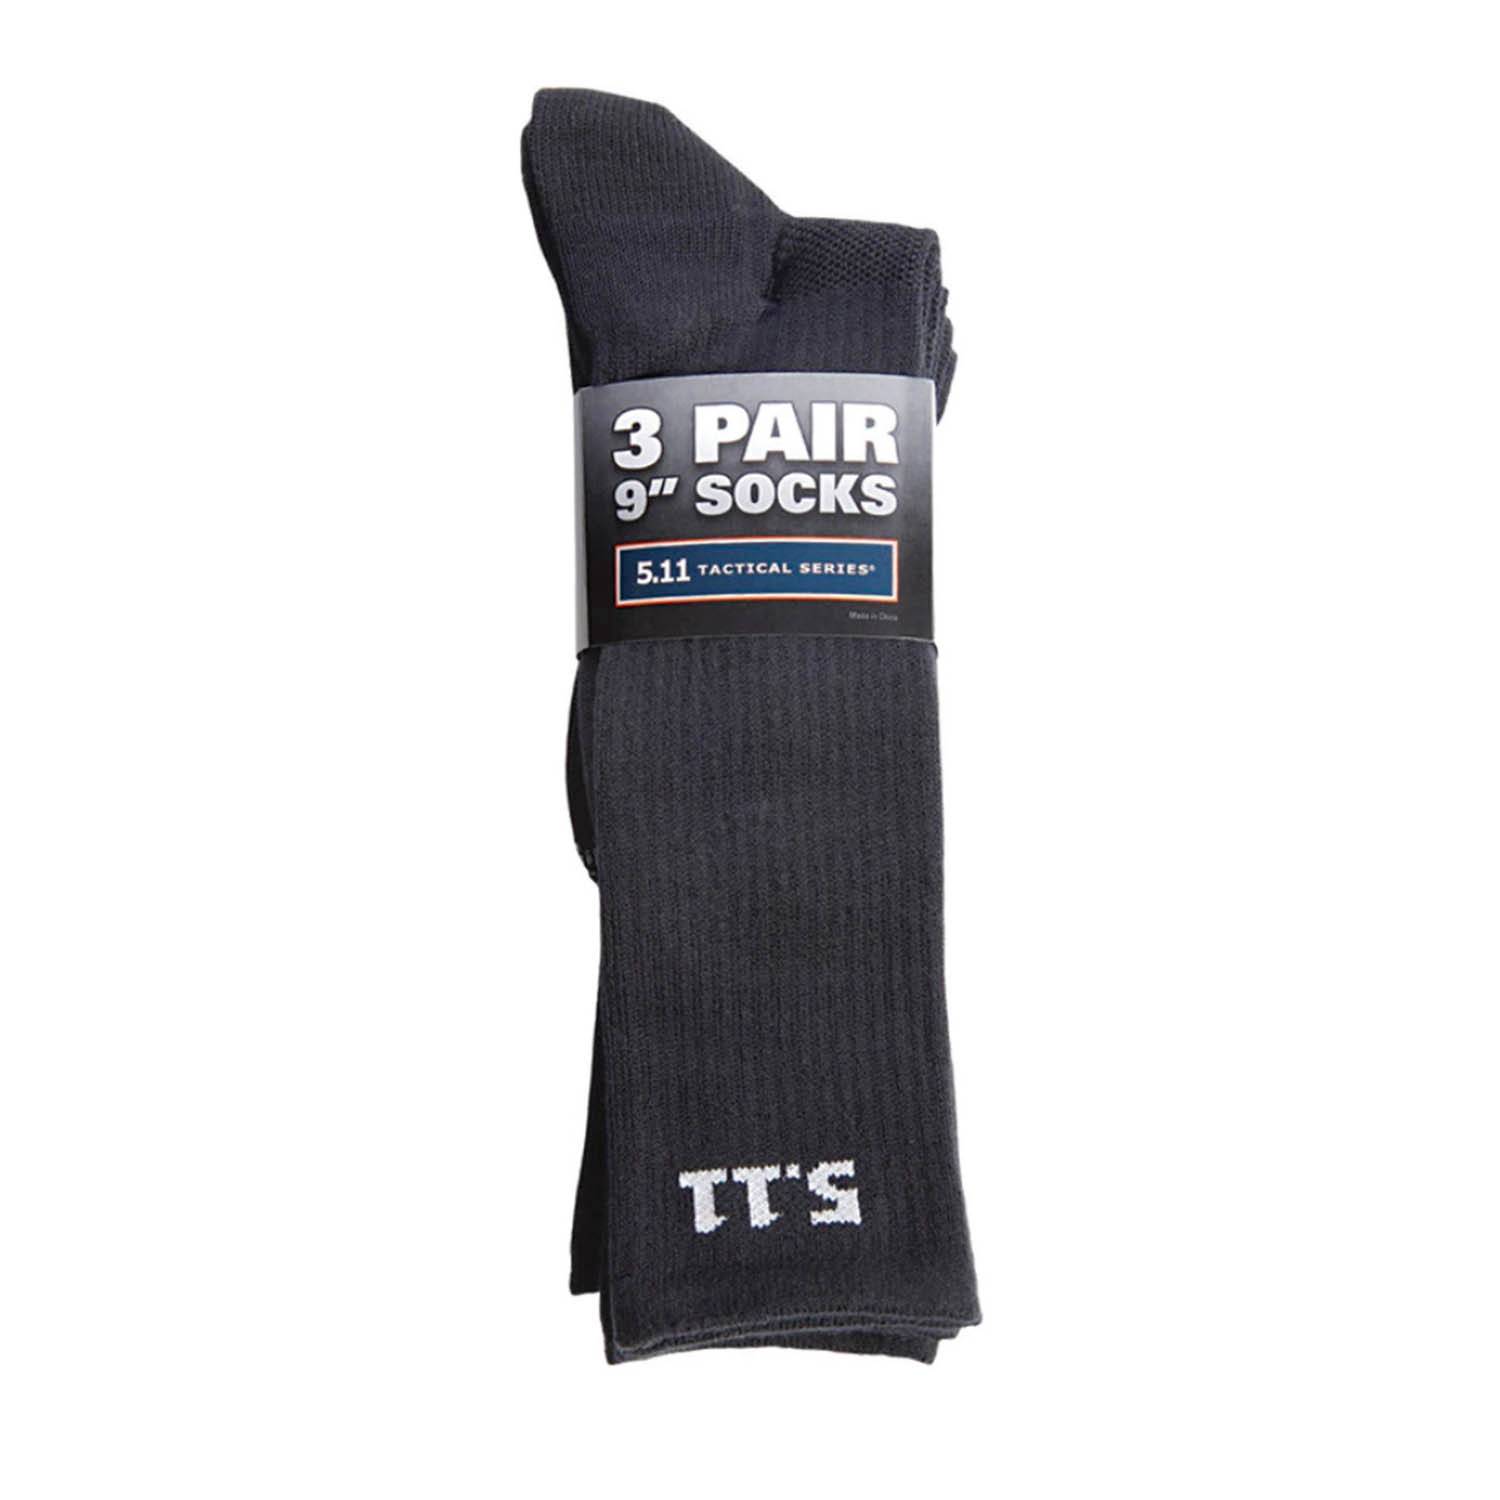 5.11 Tactical 9" Socks (Pack of 3)